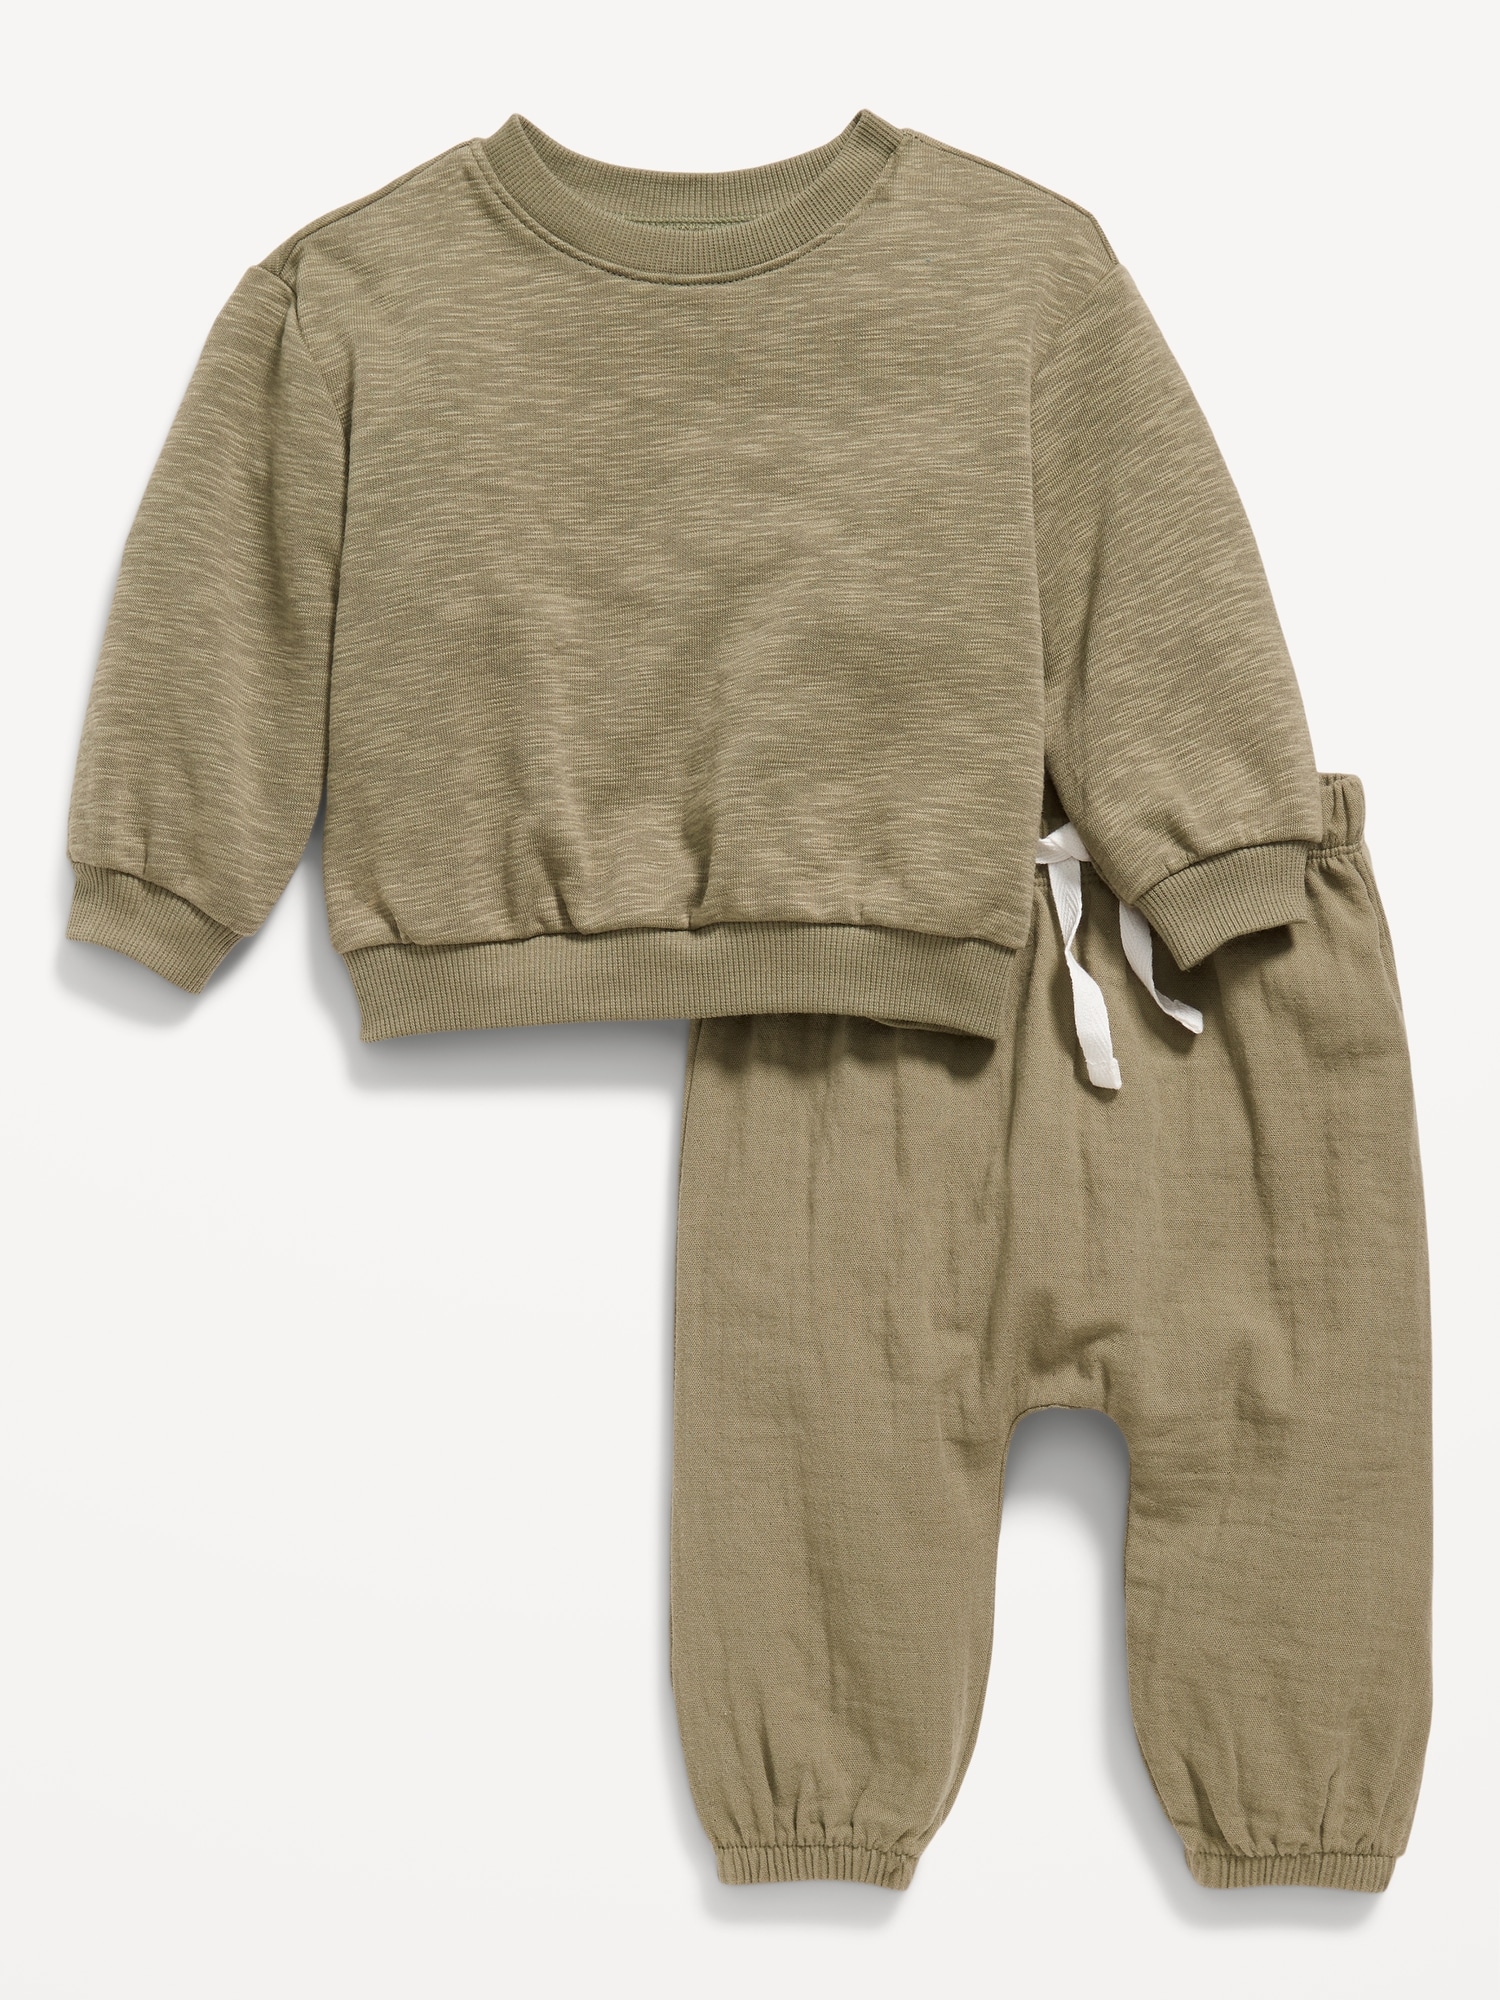 Unisex Crew-Neck Sweatshirt & Jogger Pants Set for Baby